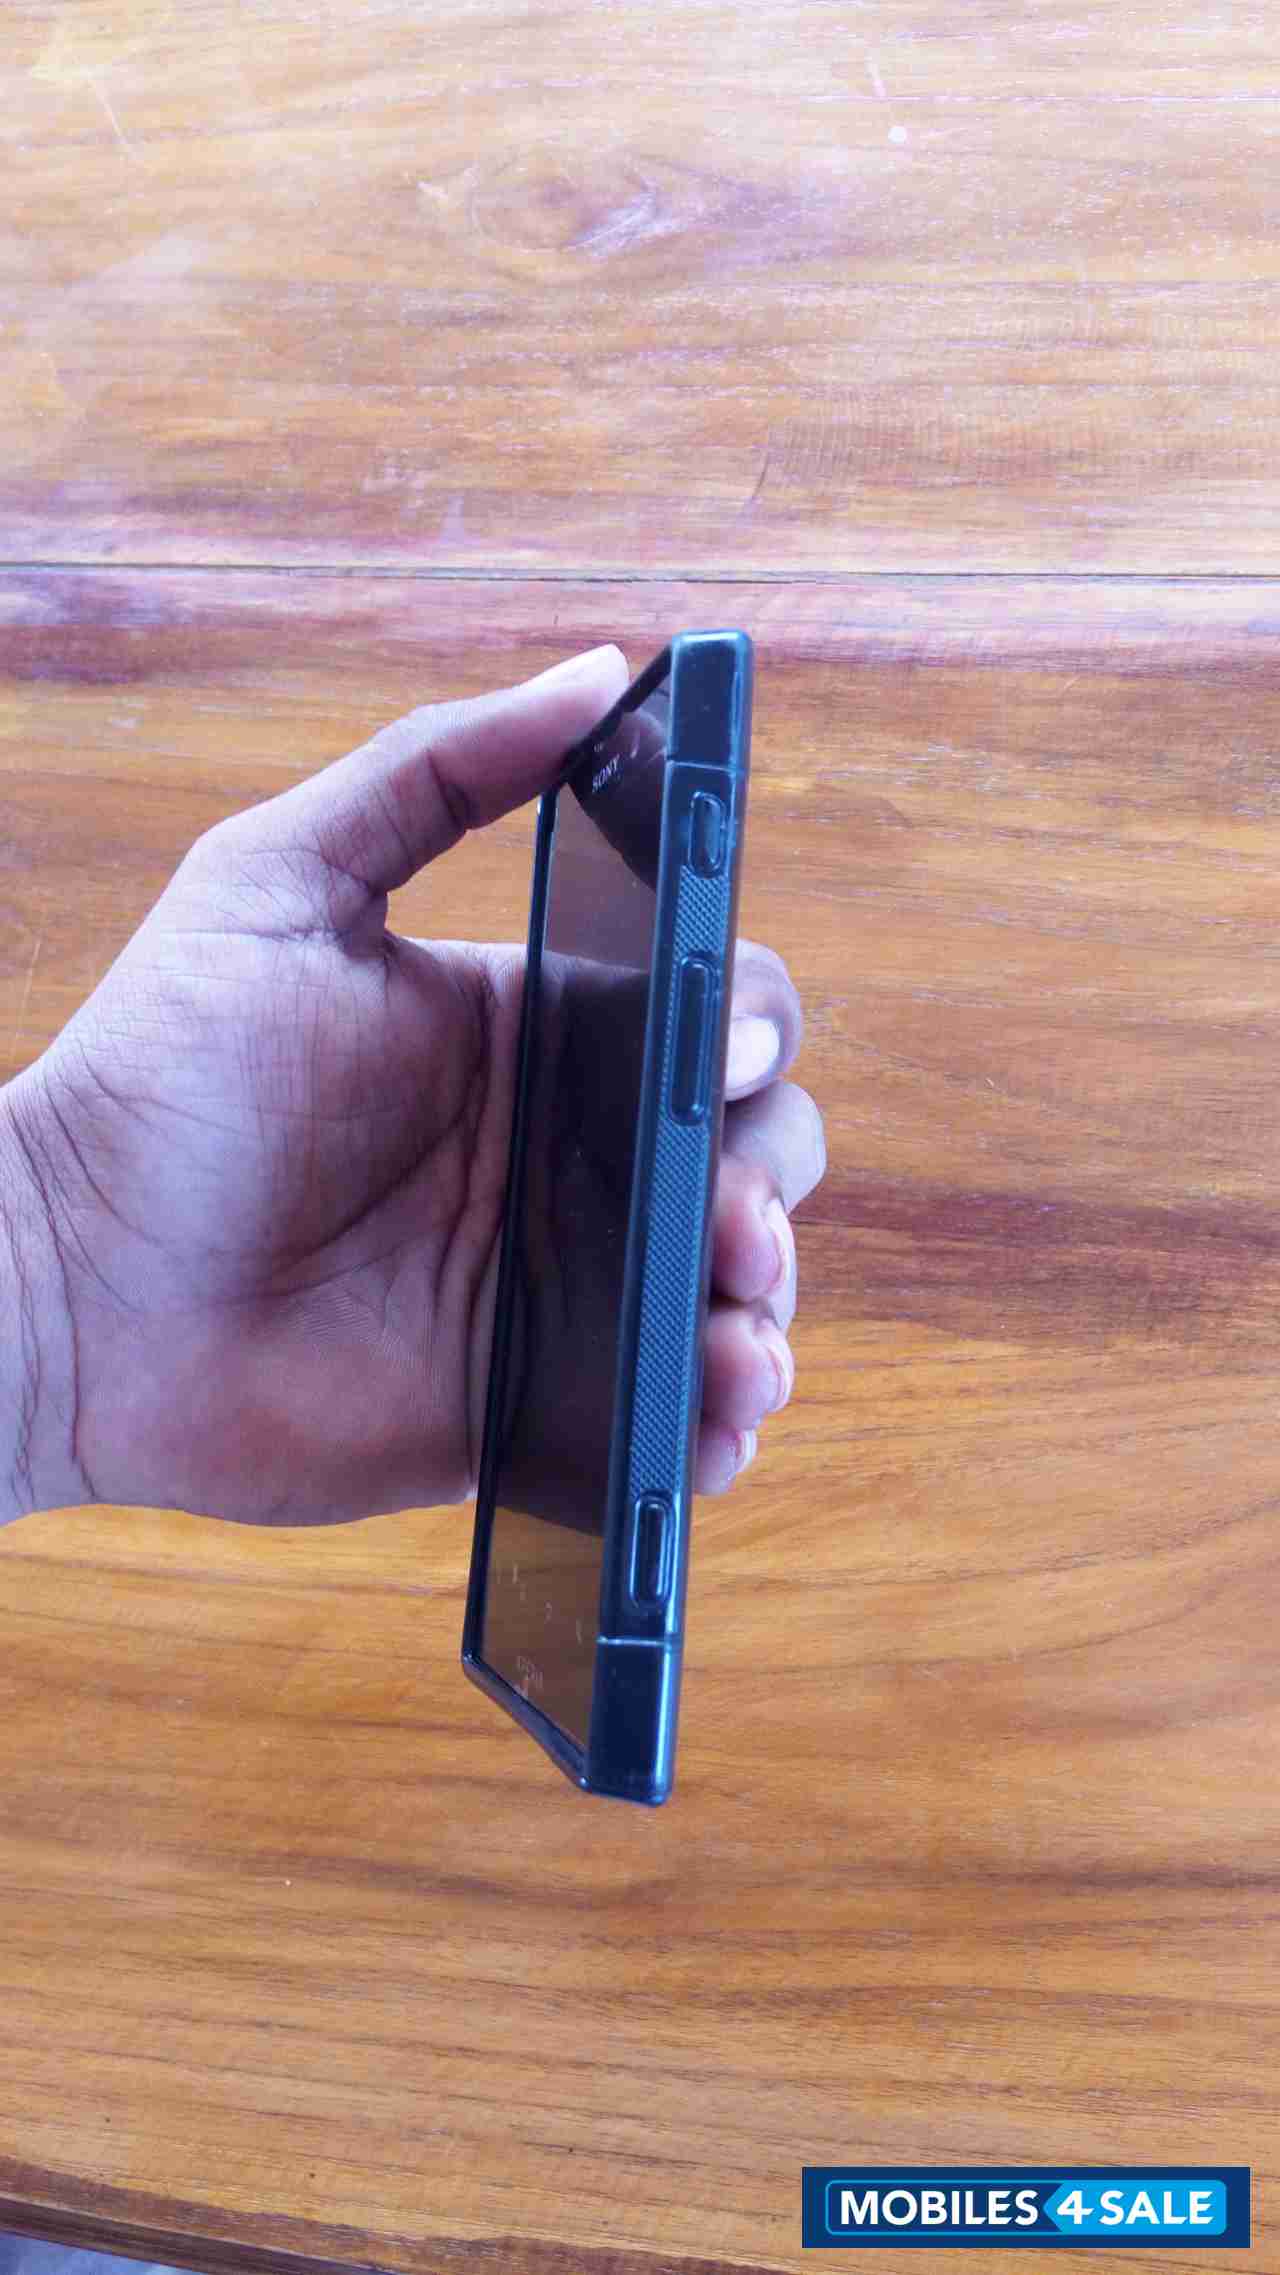 Black Sony Xperia ion